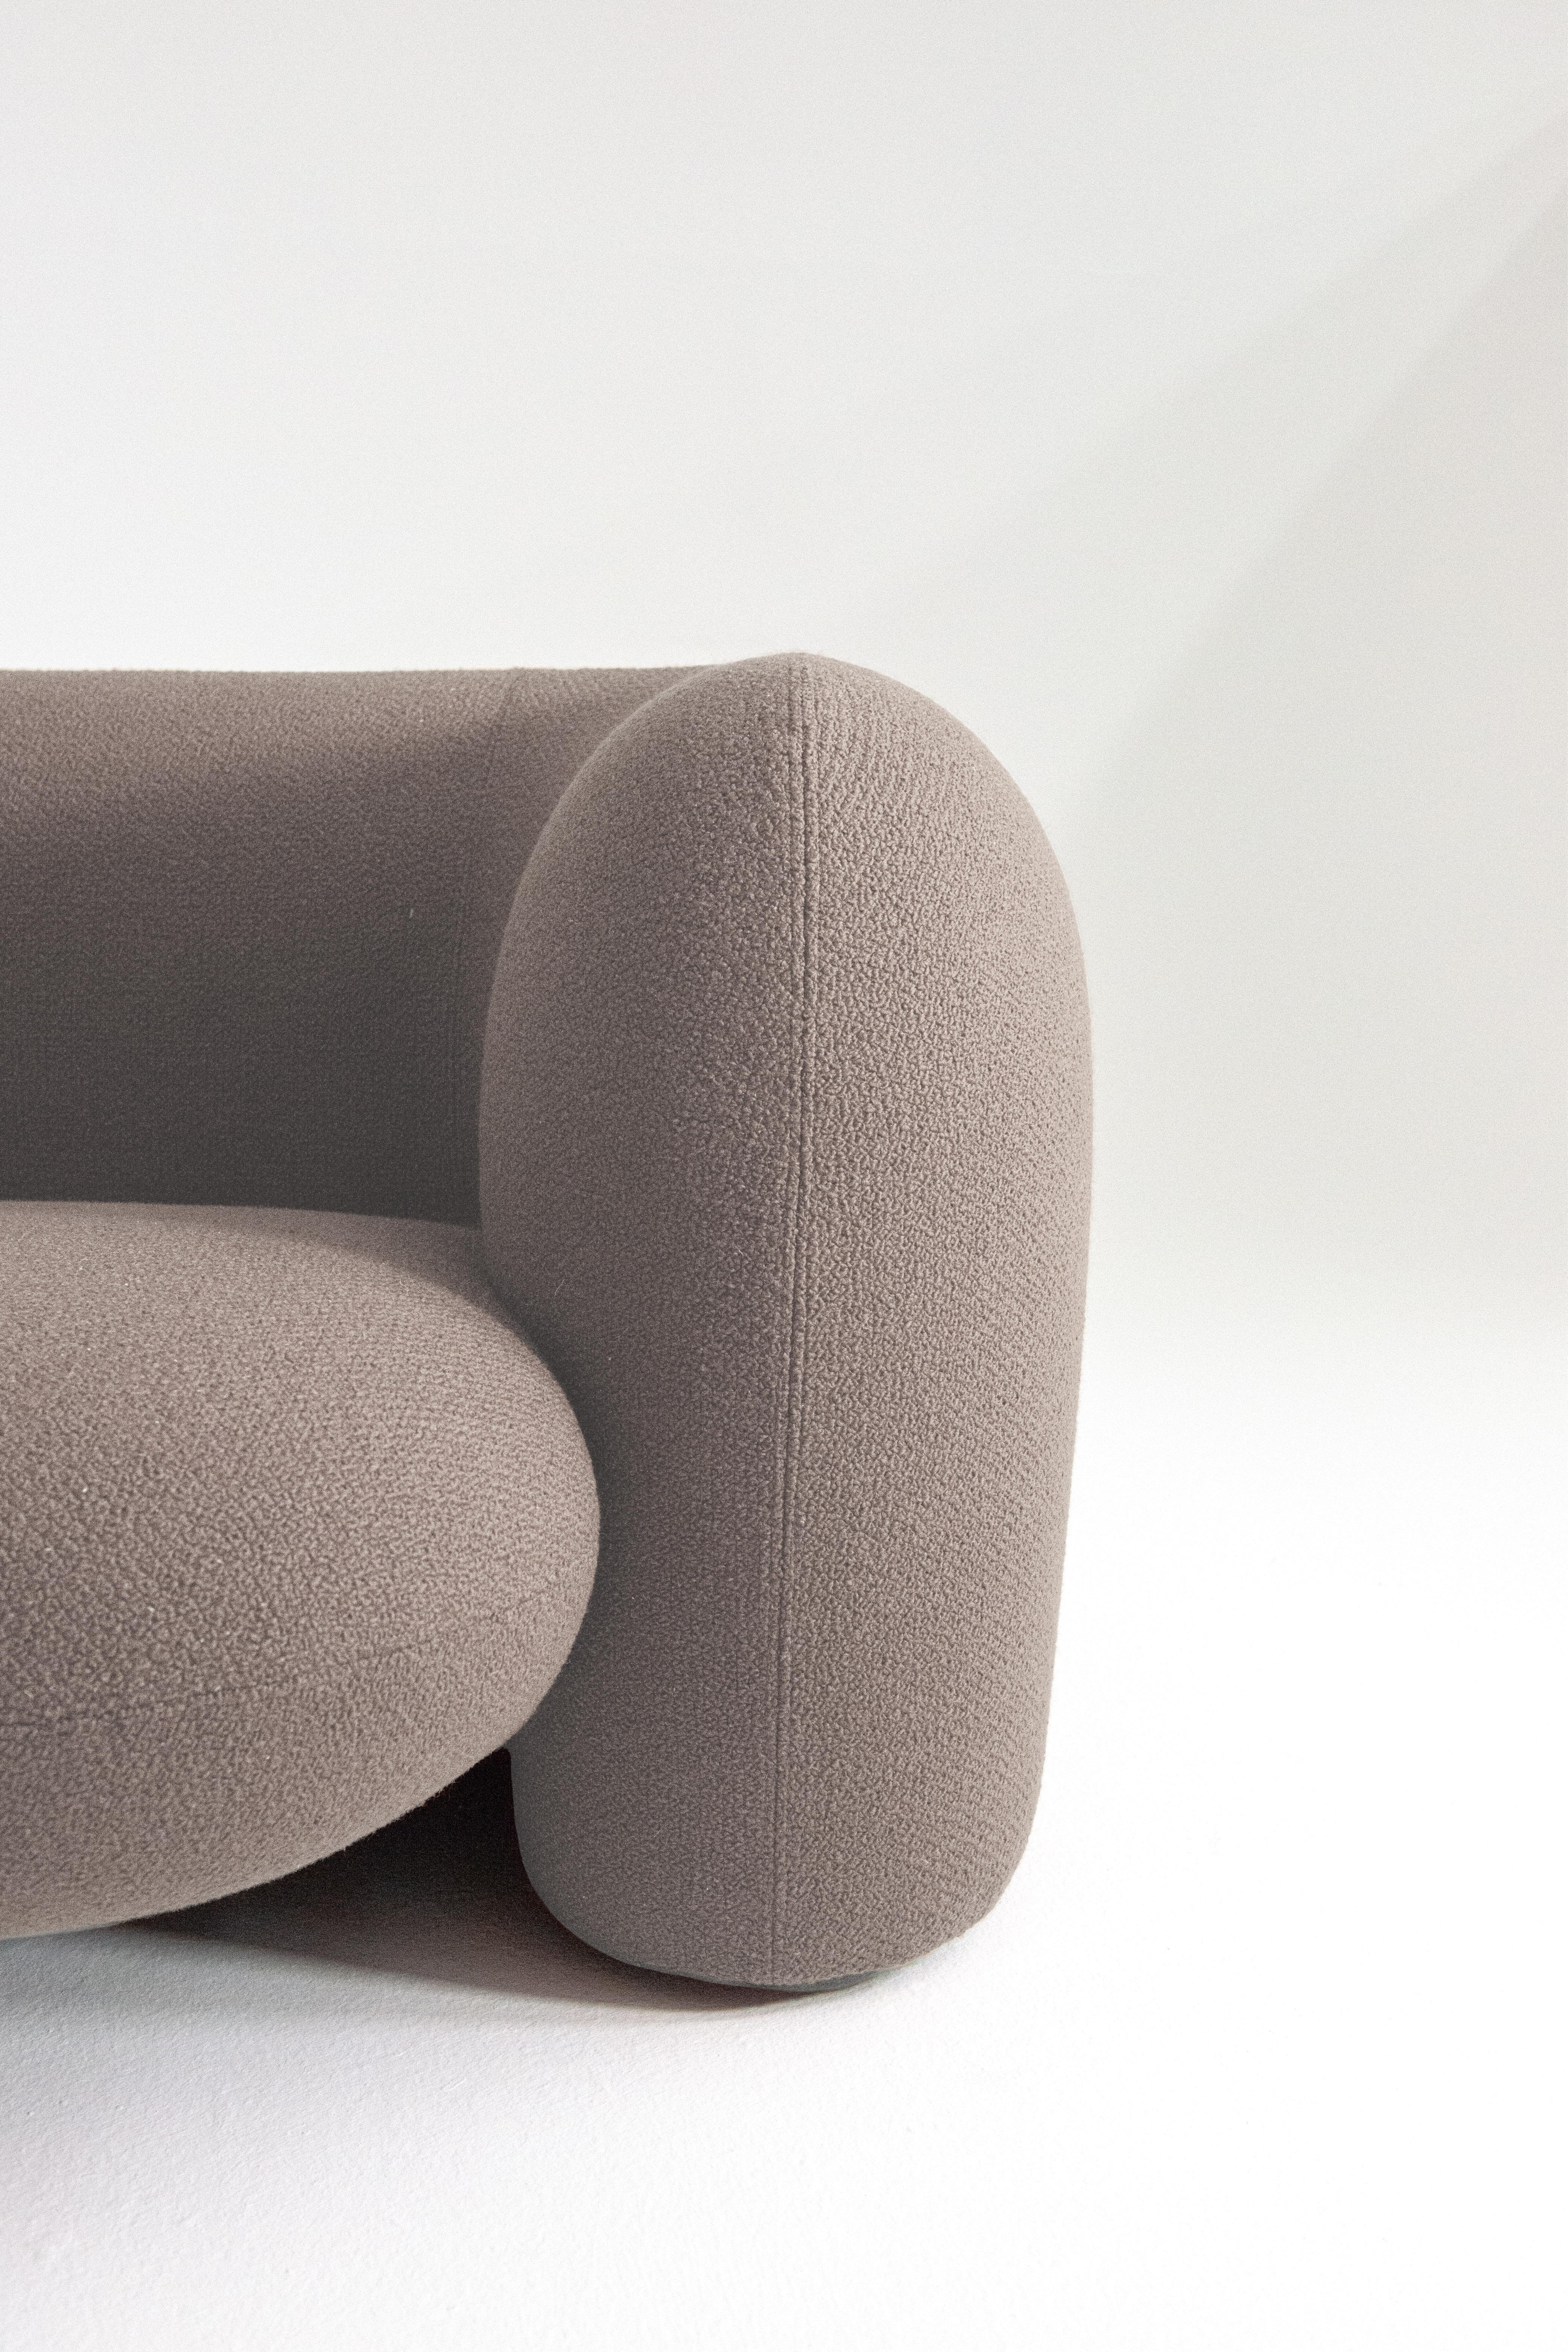 Italian Contemporary Curve Three-Seater Sofa by Hessentia in Bouclè fabric Mink colour For Sale